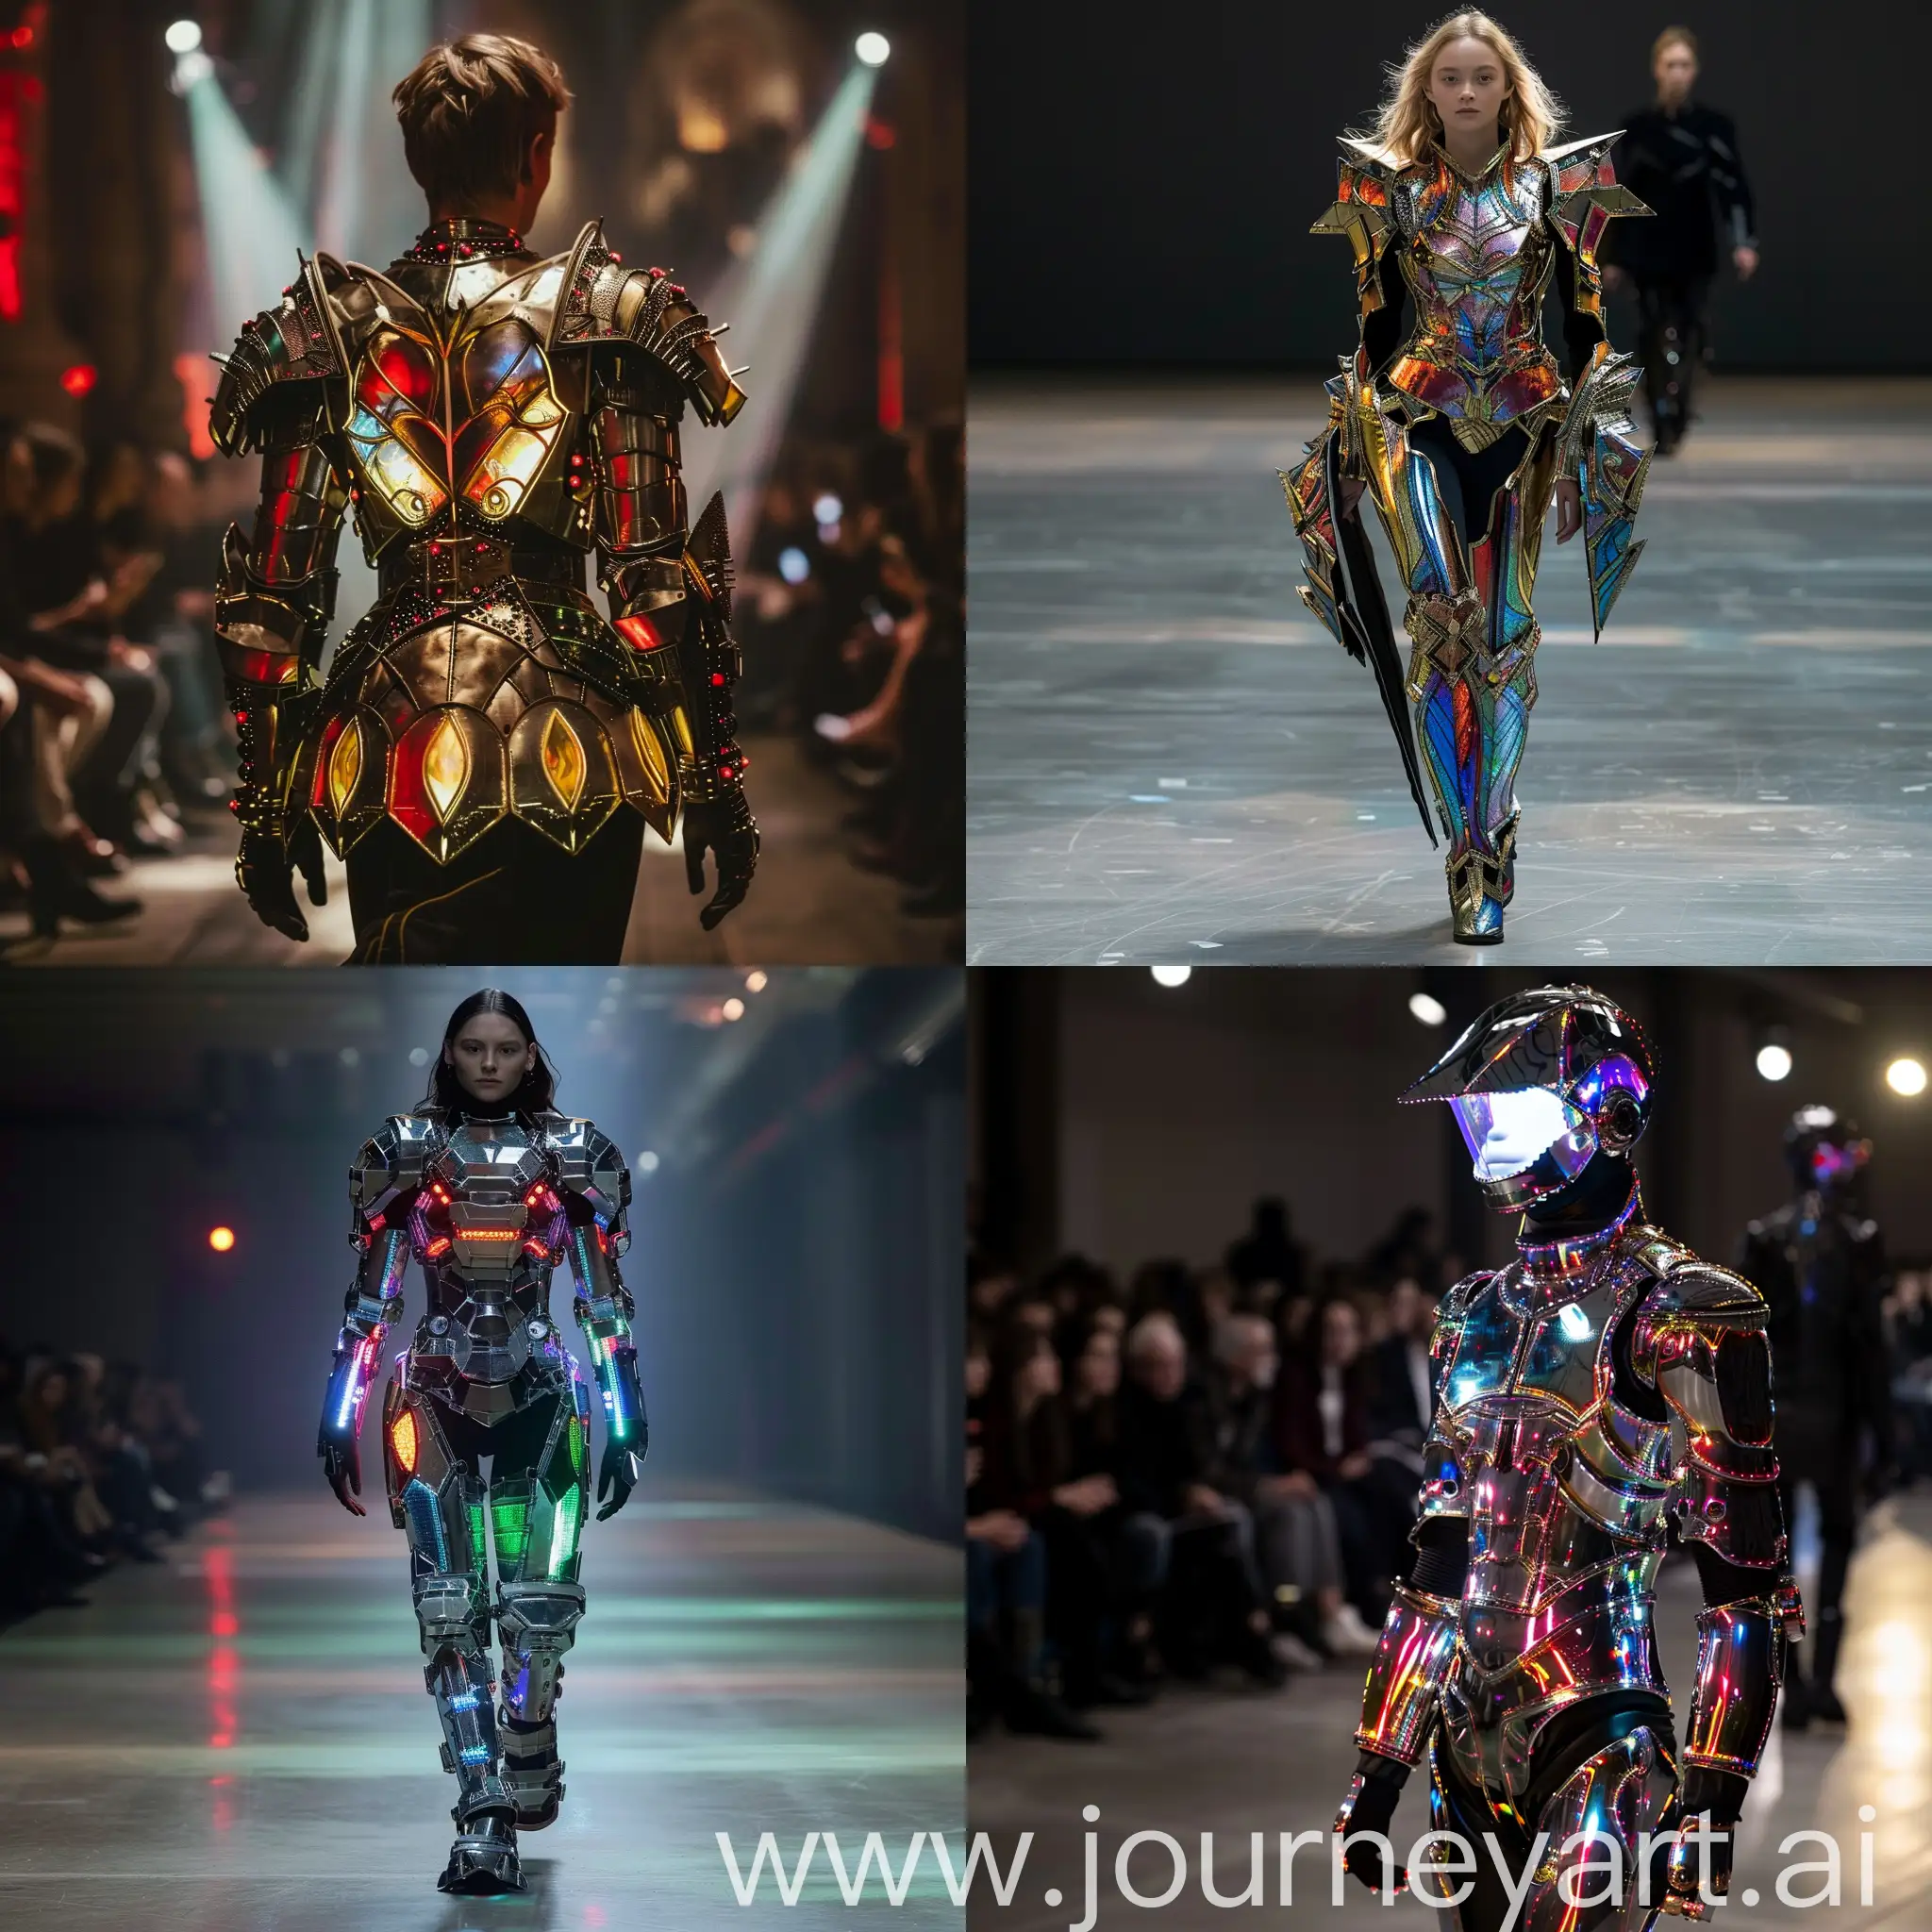 Futuristic-Cyberpunk-Armor-Fashion-Display-by-Harry-Potter